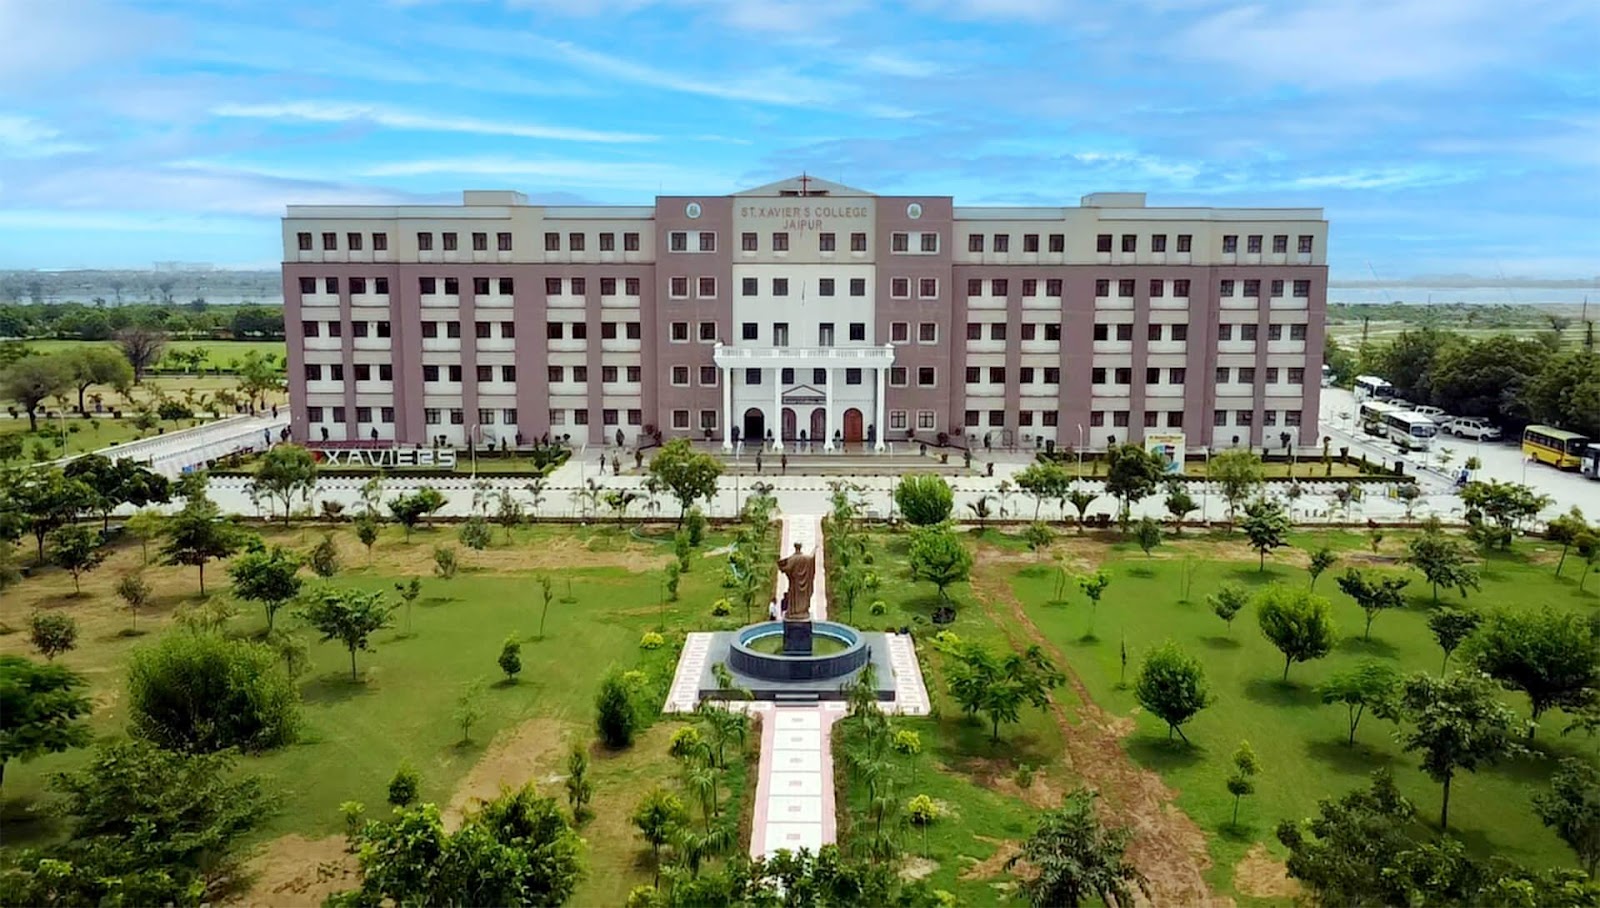 St. Xavier's College Jaipur